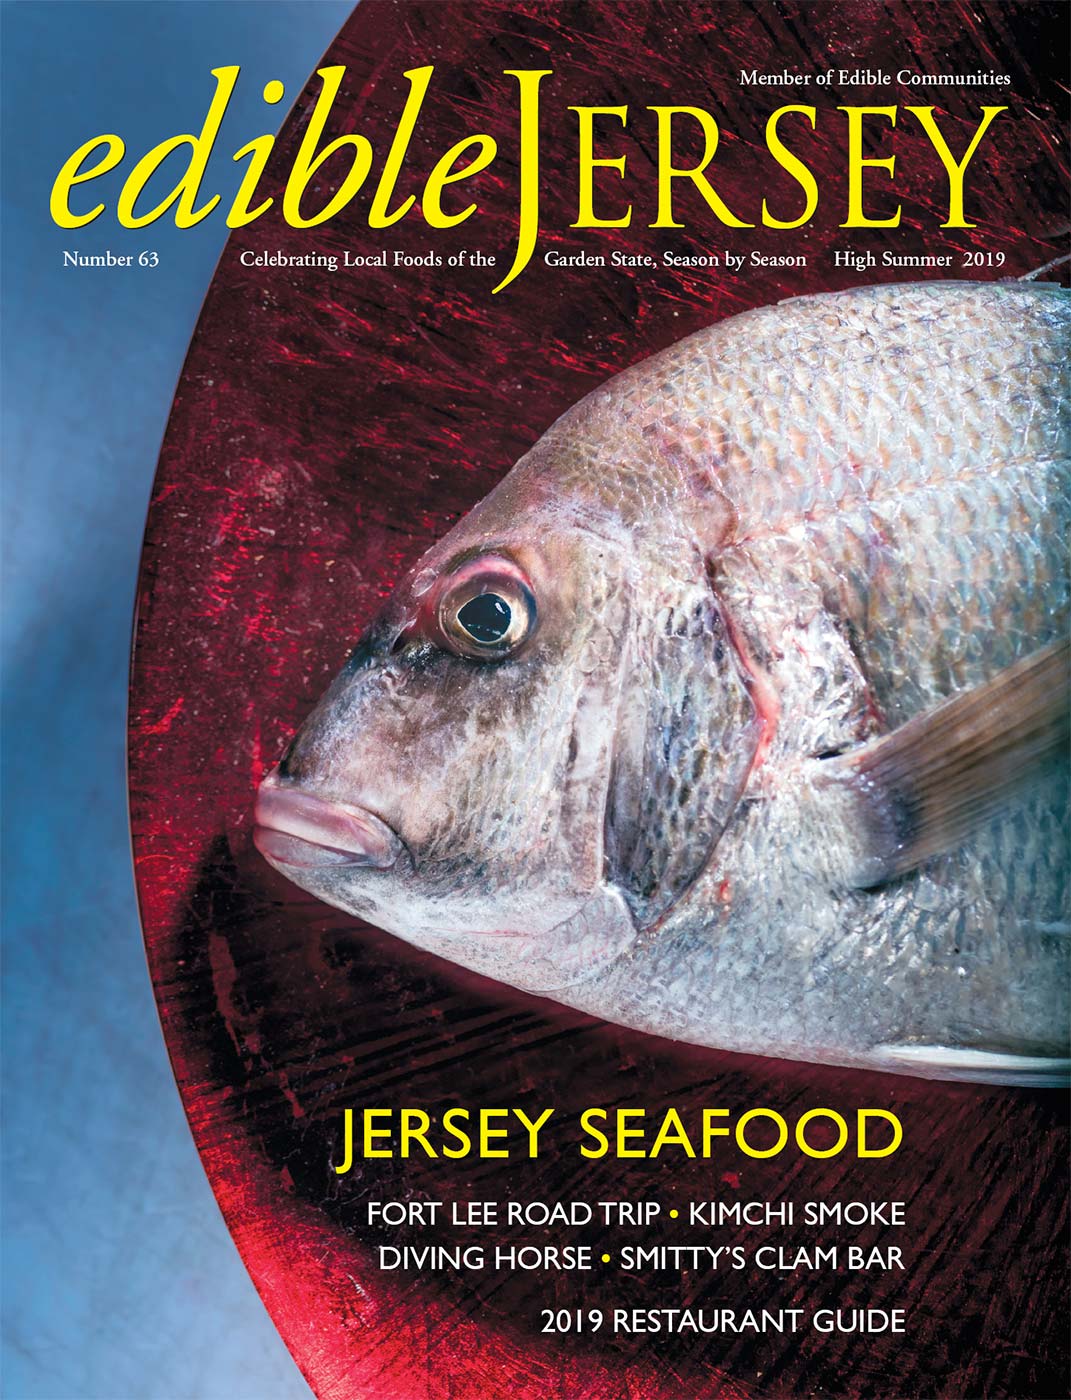 High Summer 2019 Issue Edible Jersey